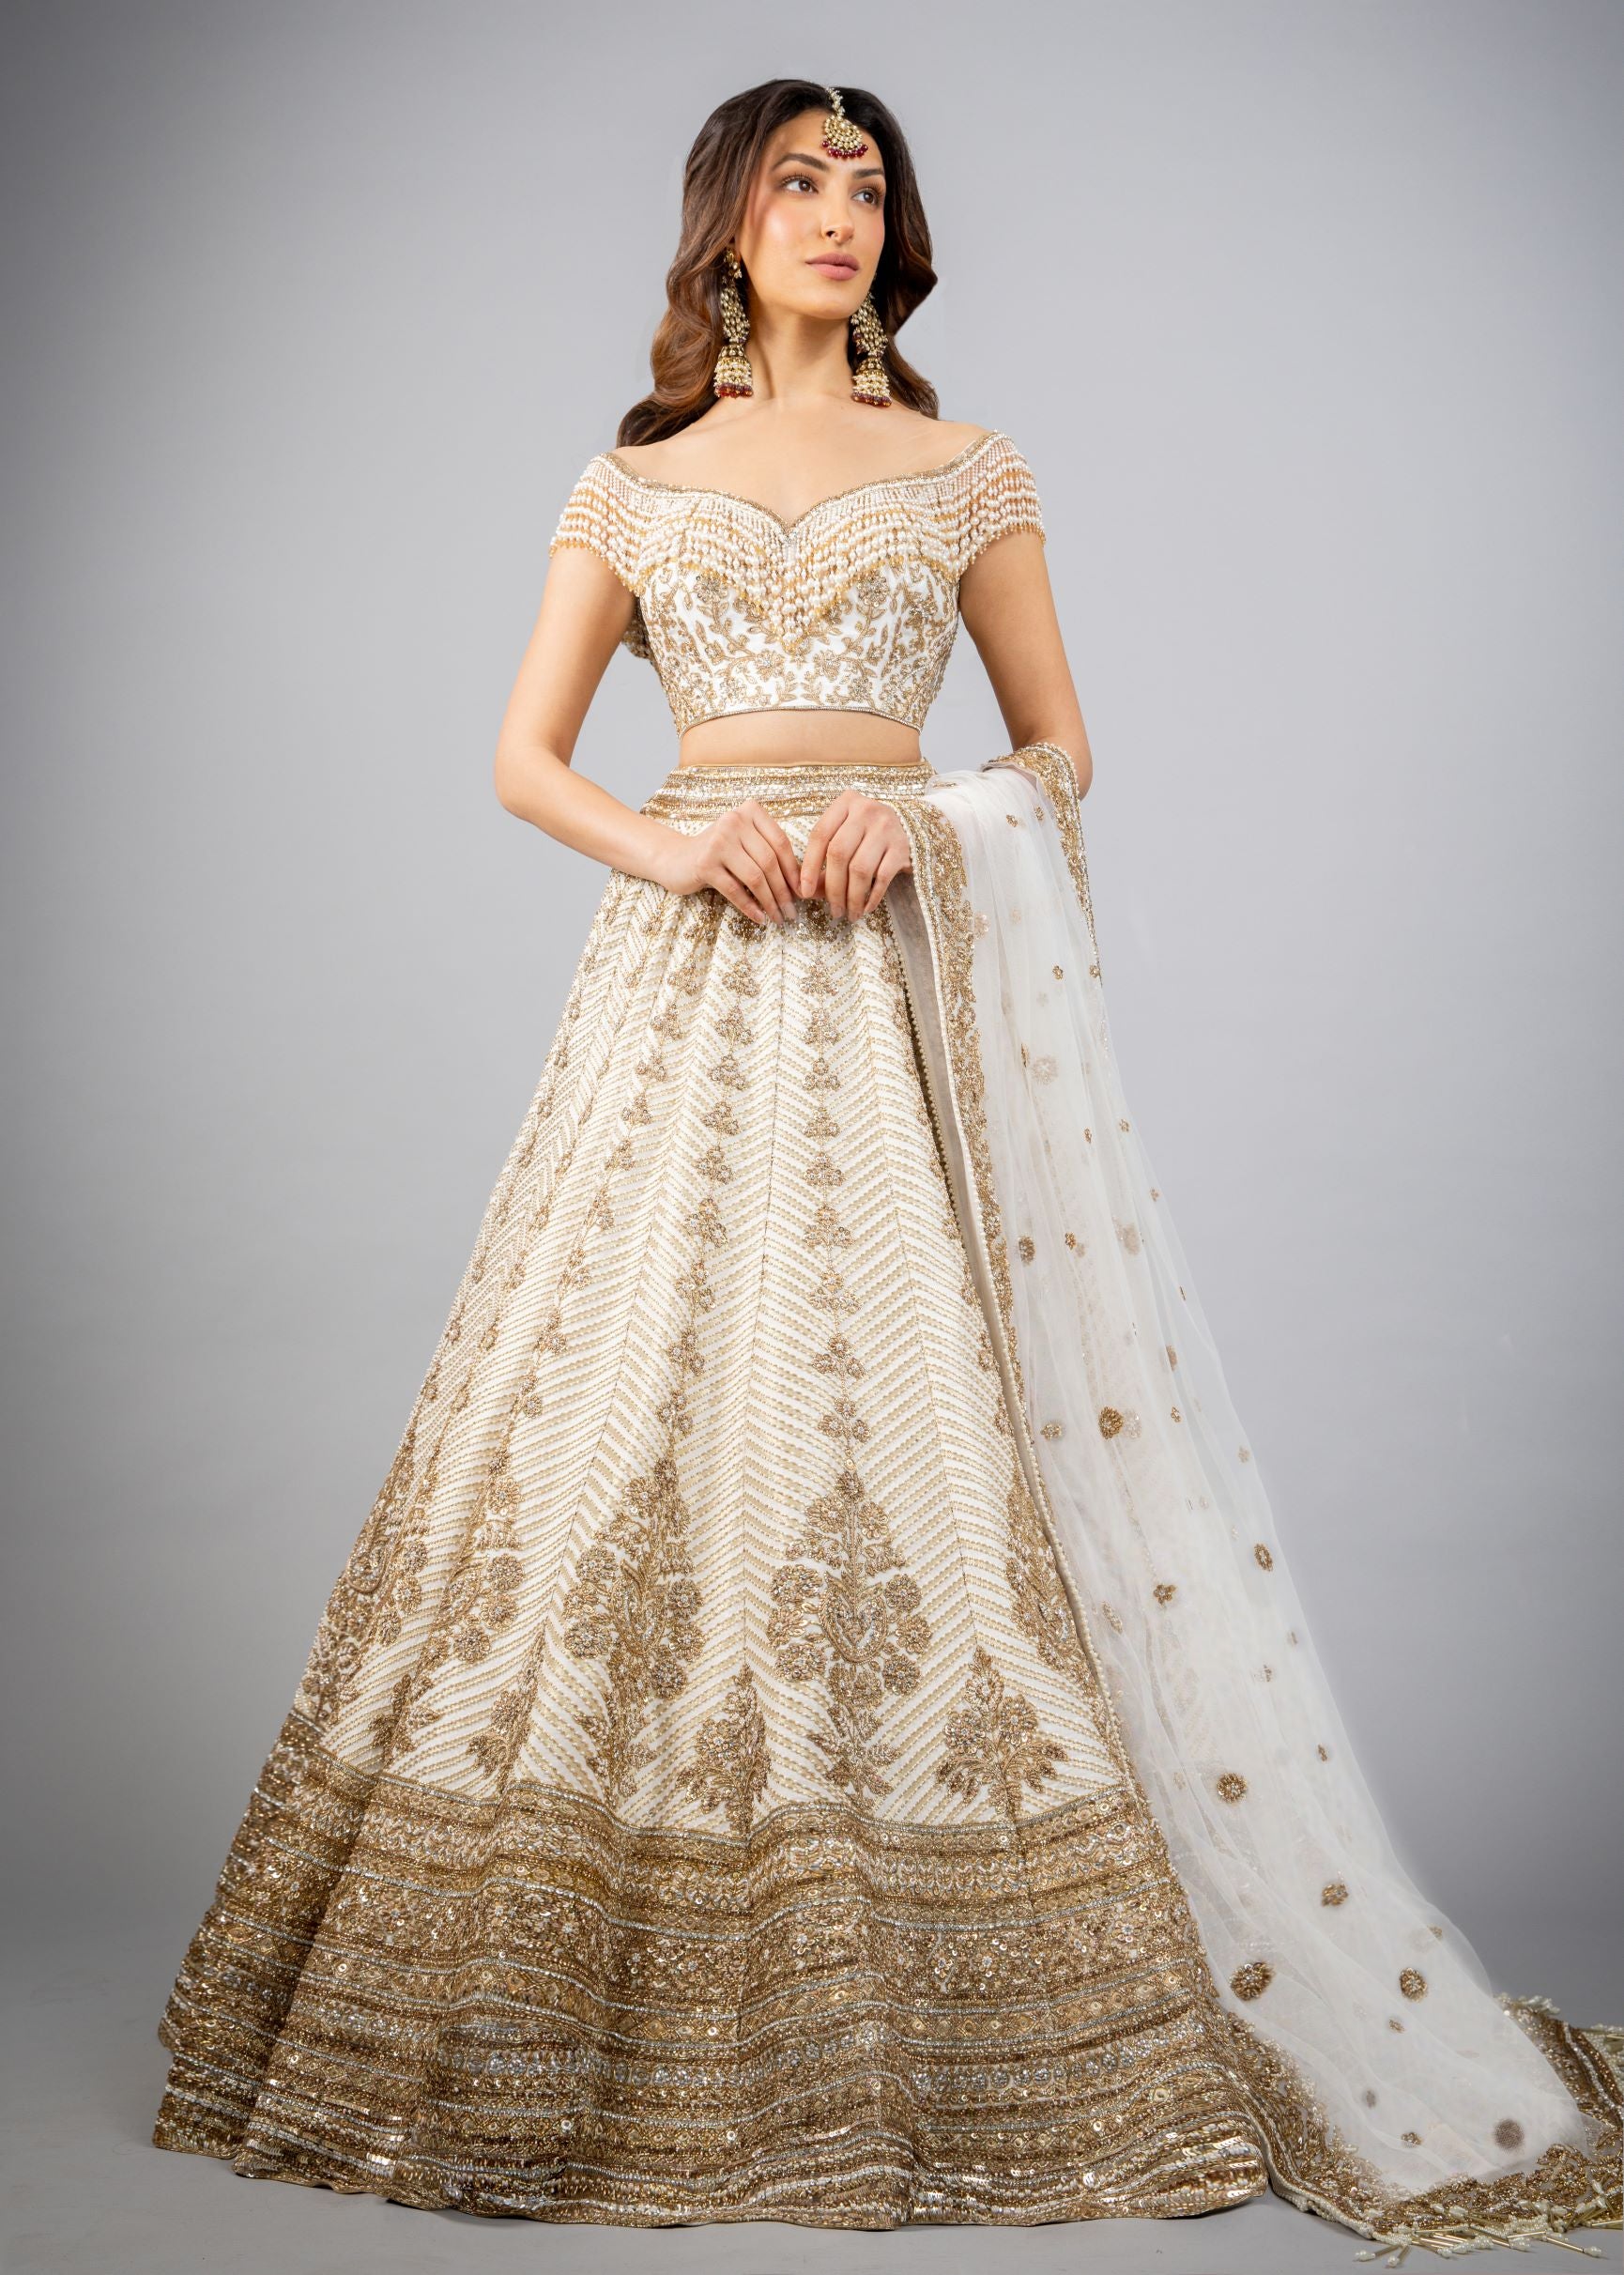 Indian Kameez Stylish Dress Party Suit Long Wear Wedding Style Gown  Pakistani | eBay